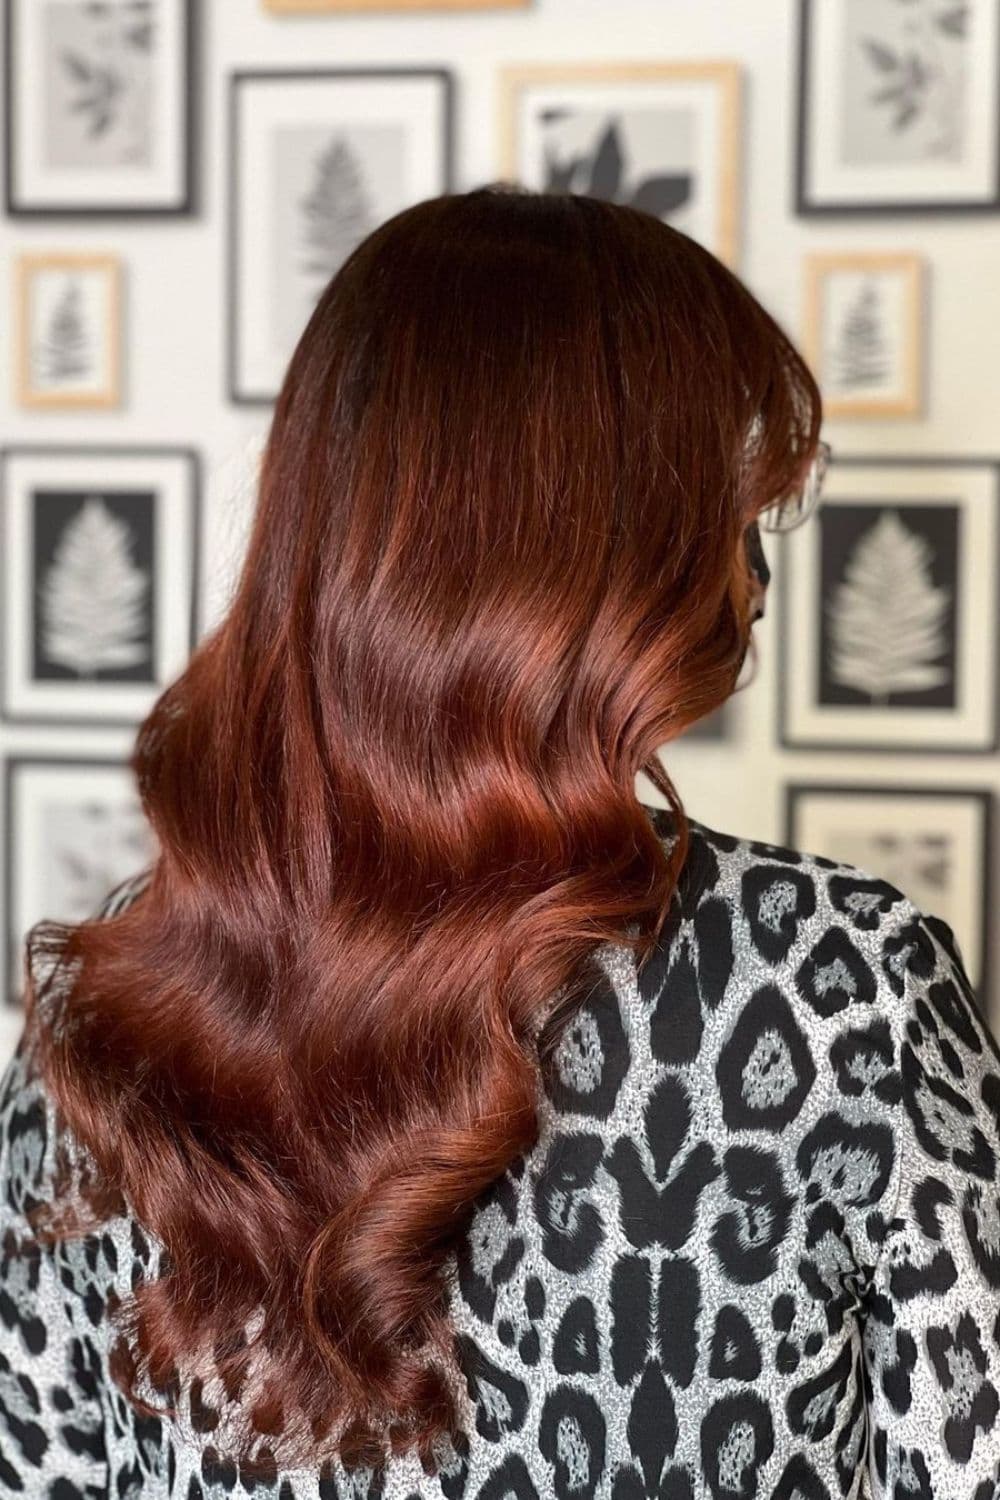 A woman with long wavy rich auburn red hair.